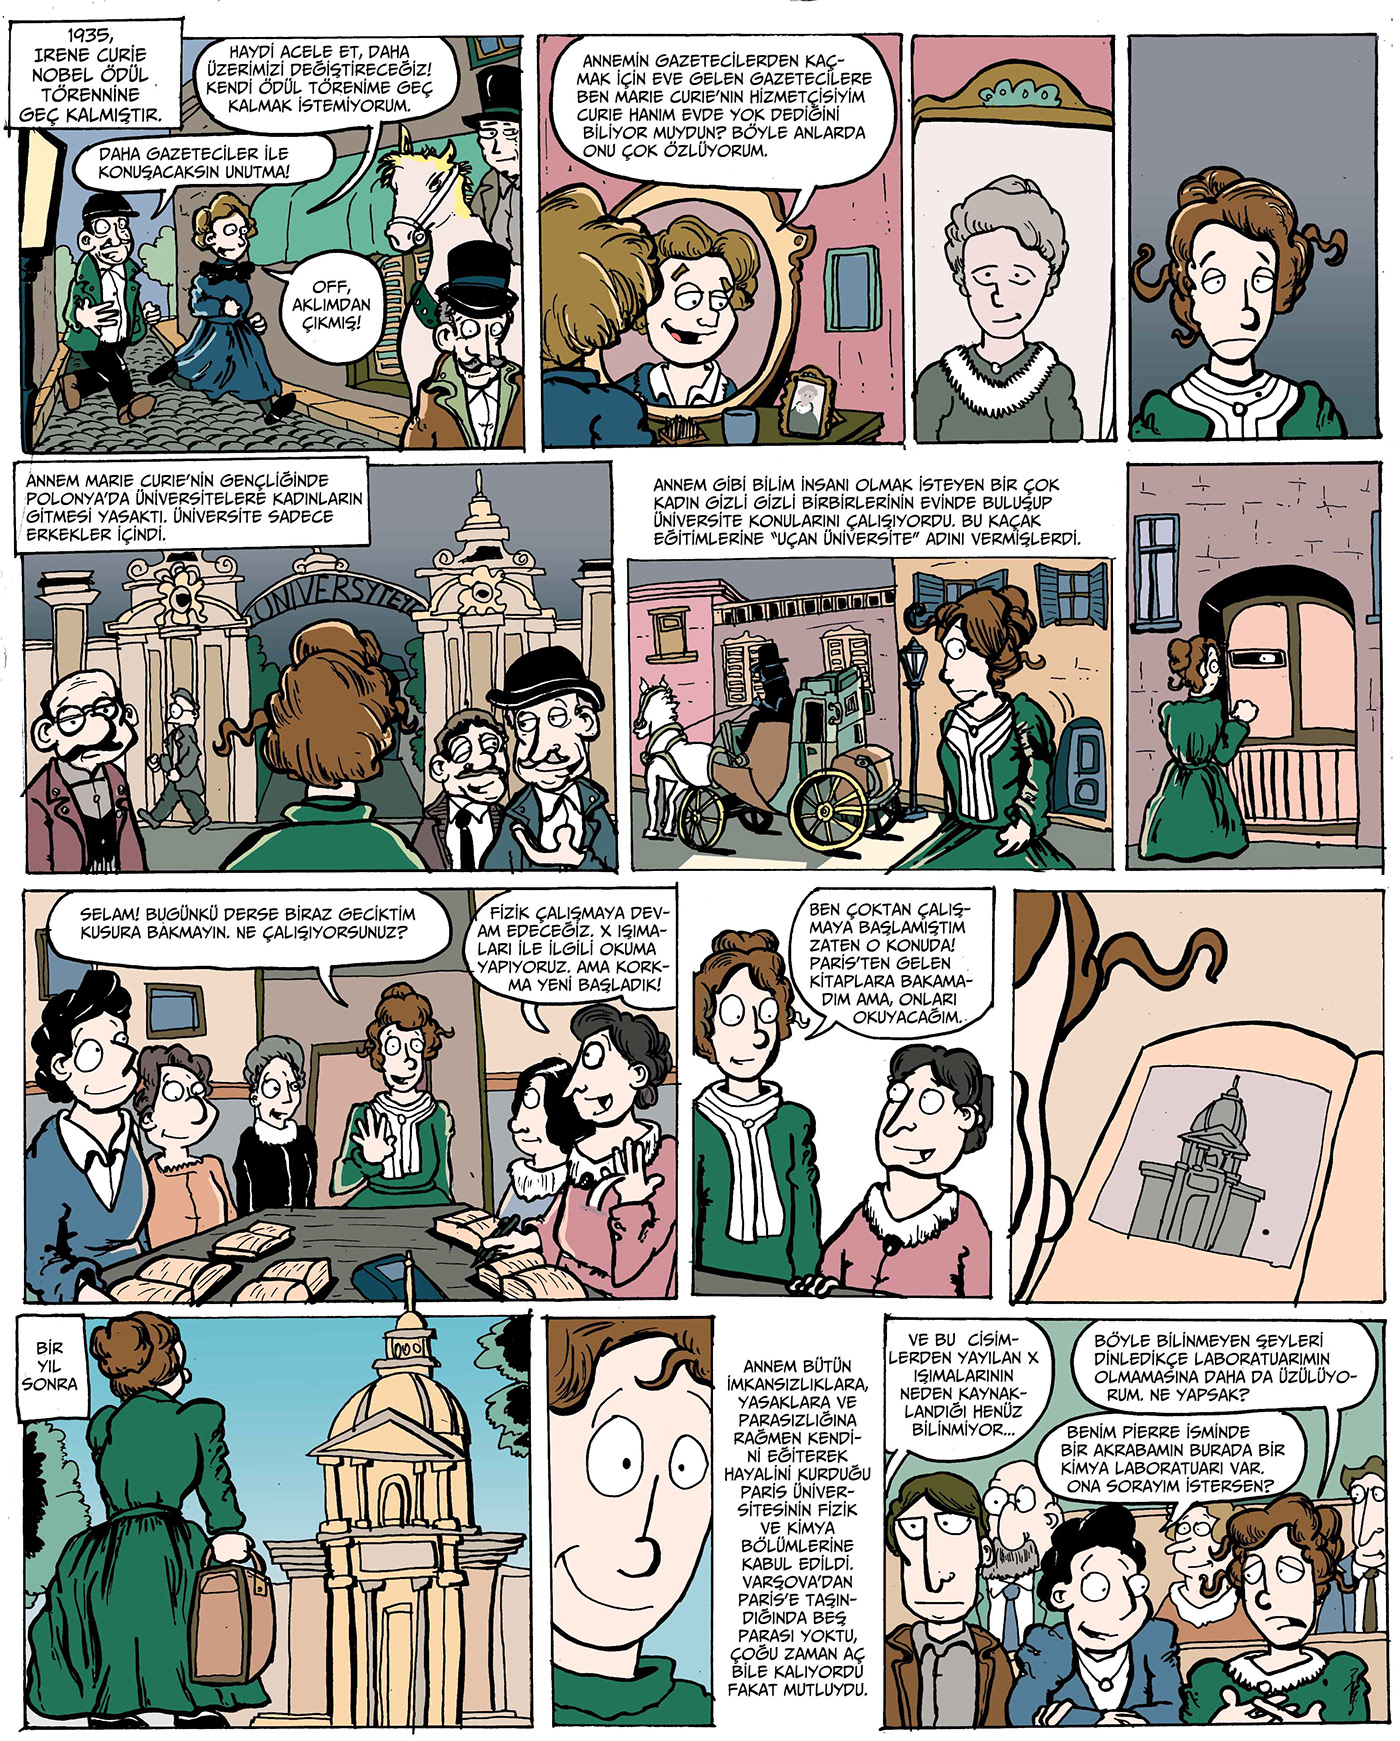 comics comic Graphic Novel sicence marie curie women scientists ILLUSTRATION 